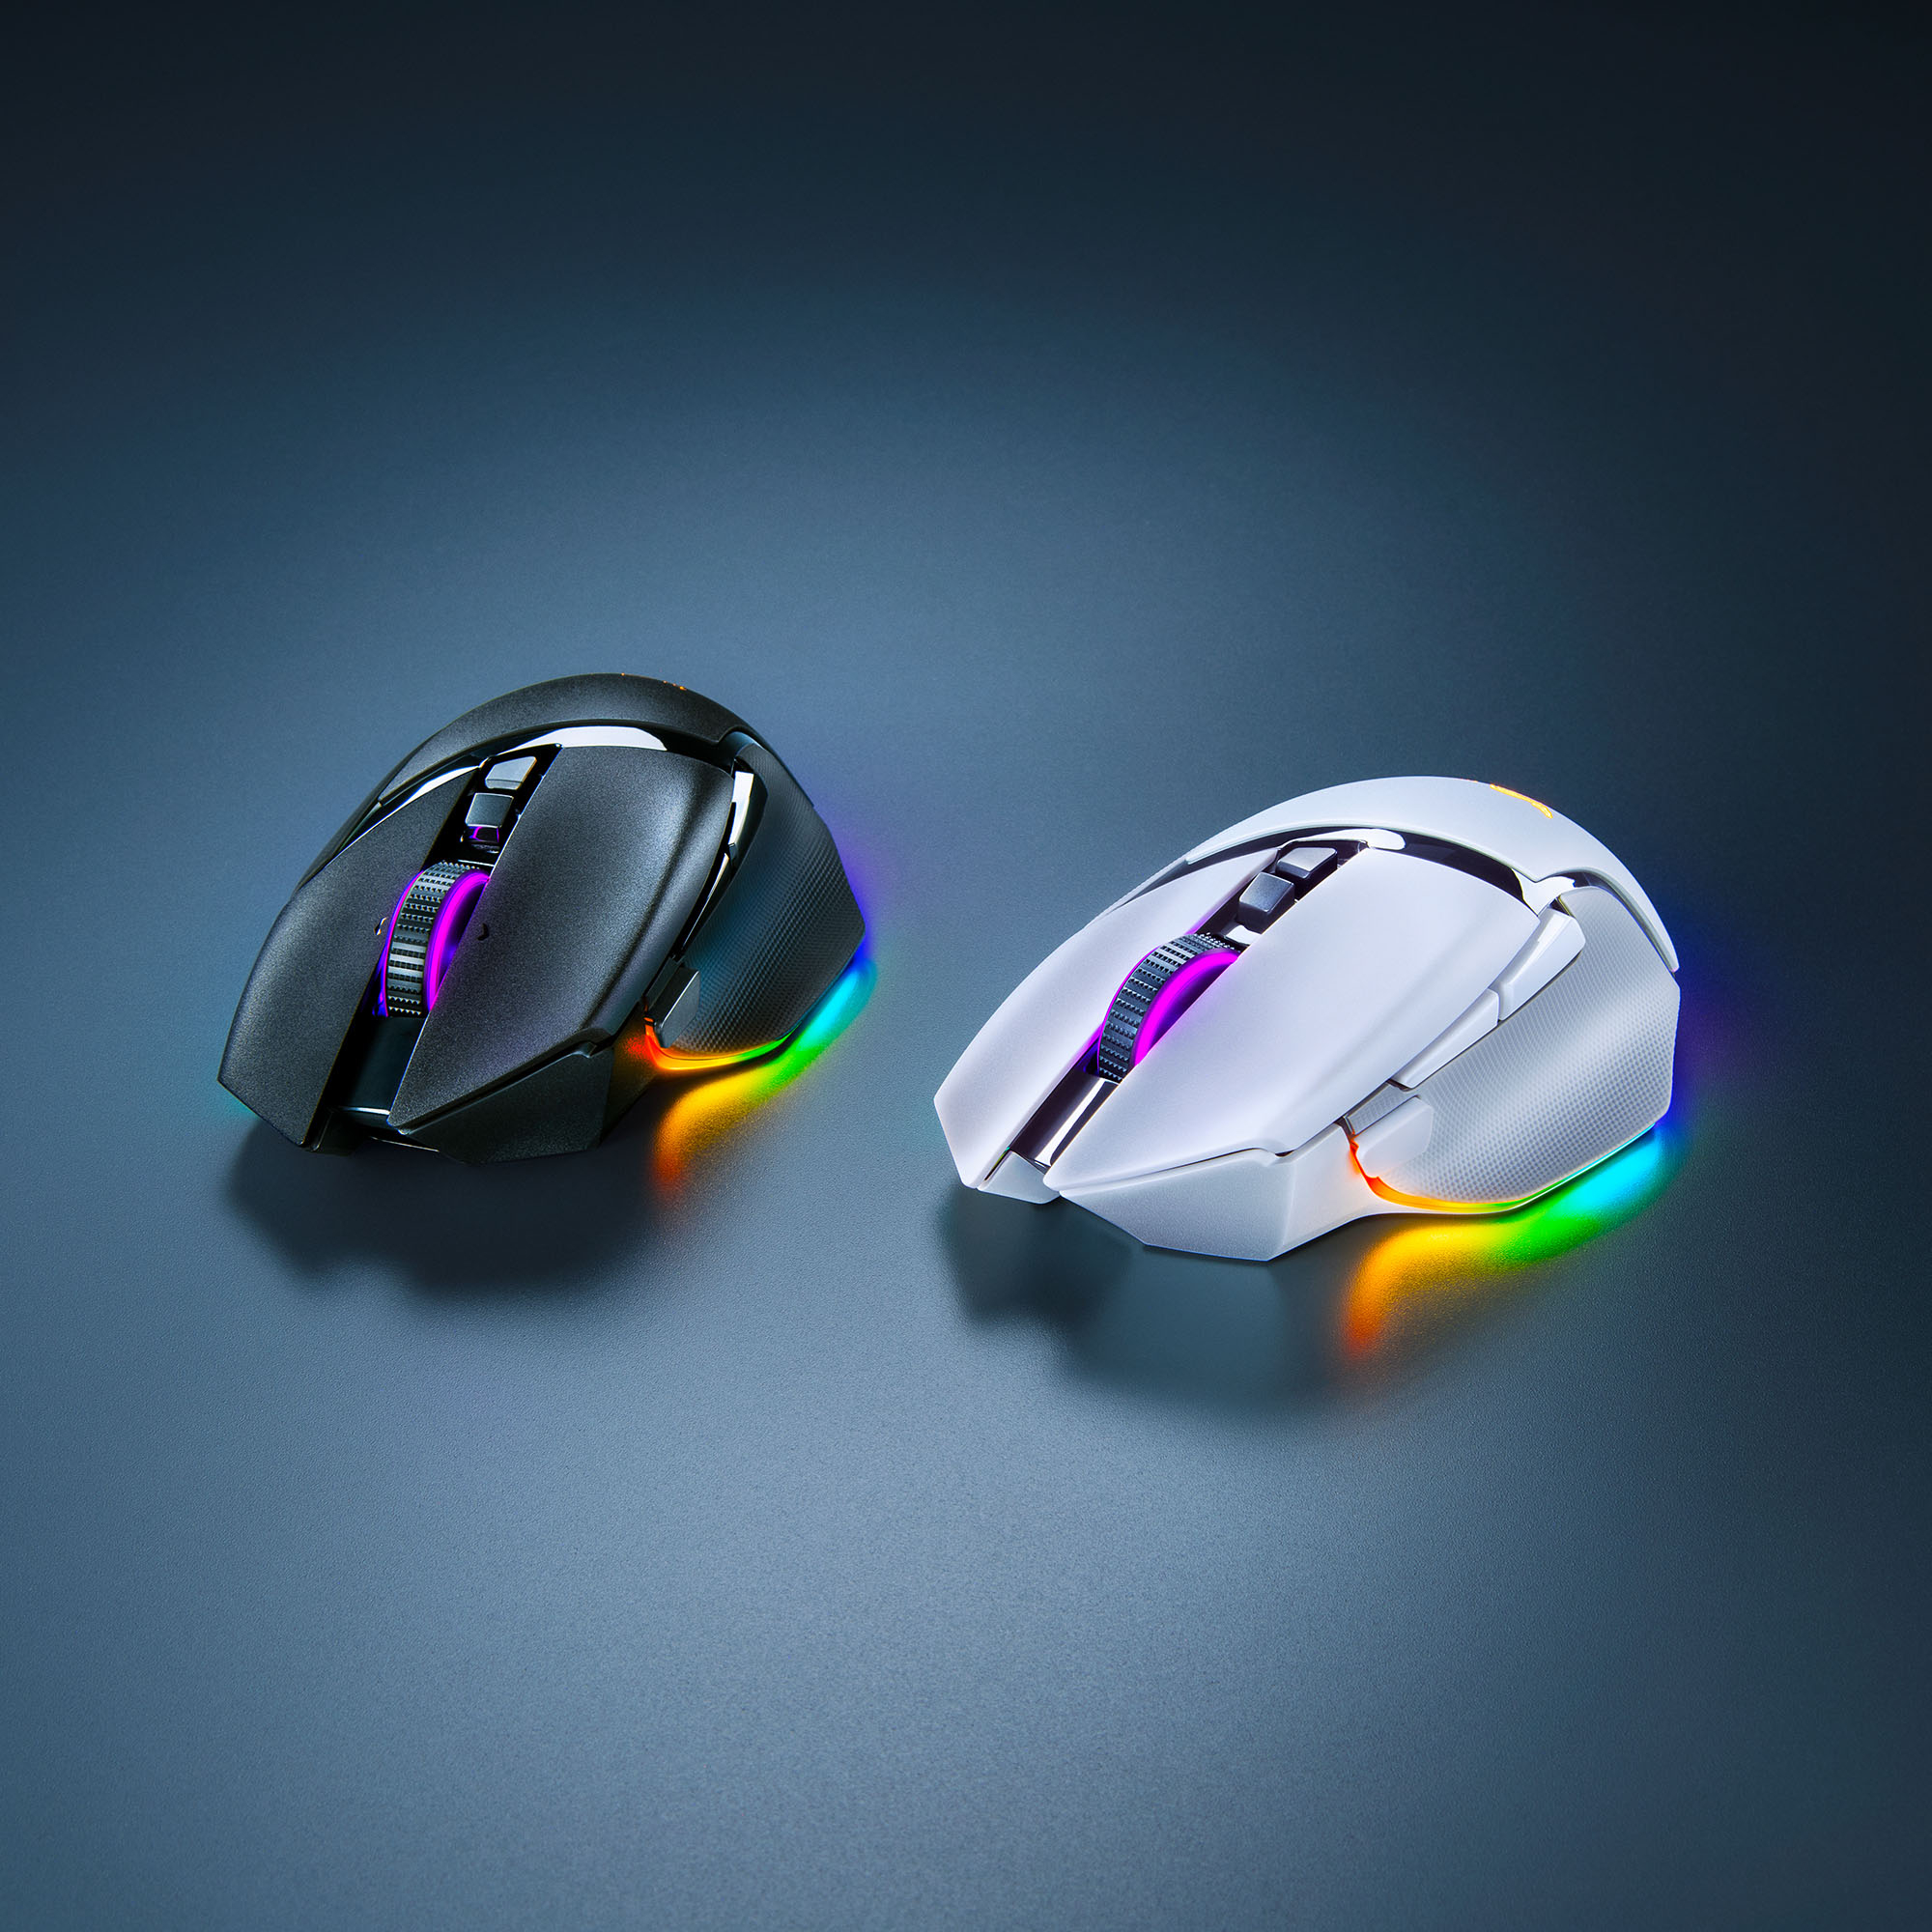 Razer Basilisk V3 Customizable Ergonomic Gaming Mouse: Fastest Gaming Mouse  Switch - Chroma RGB Lighting - 26K DPI Optical Sensor - 11 Programmable  Buttons - HyperScroll Tilt Wheel - Classic 